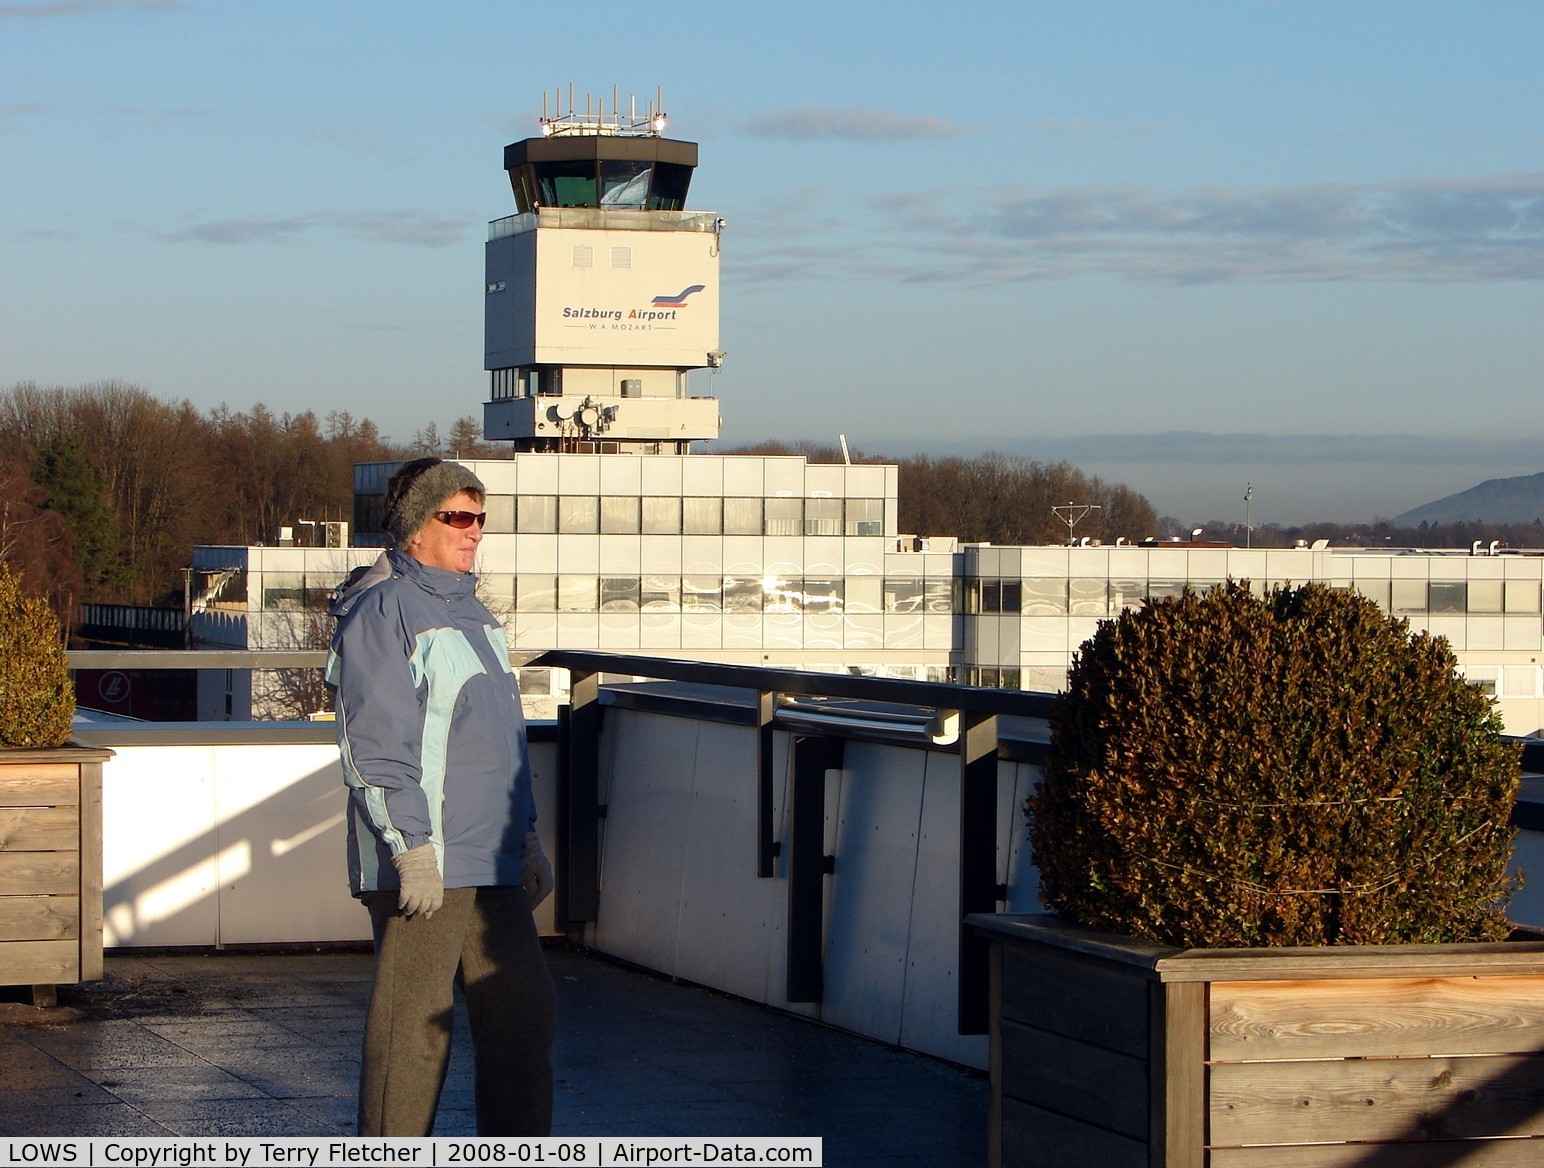 Salzburg Airport, Salzburg Austria (LOWS) - Salzburg Airport has an excellent free open-air observation gallery